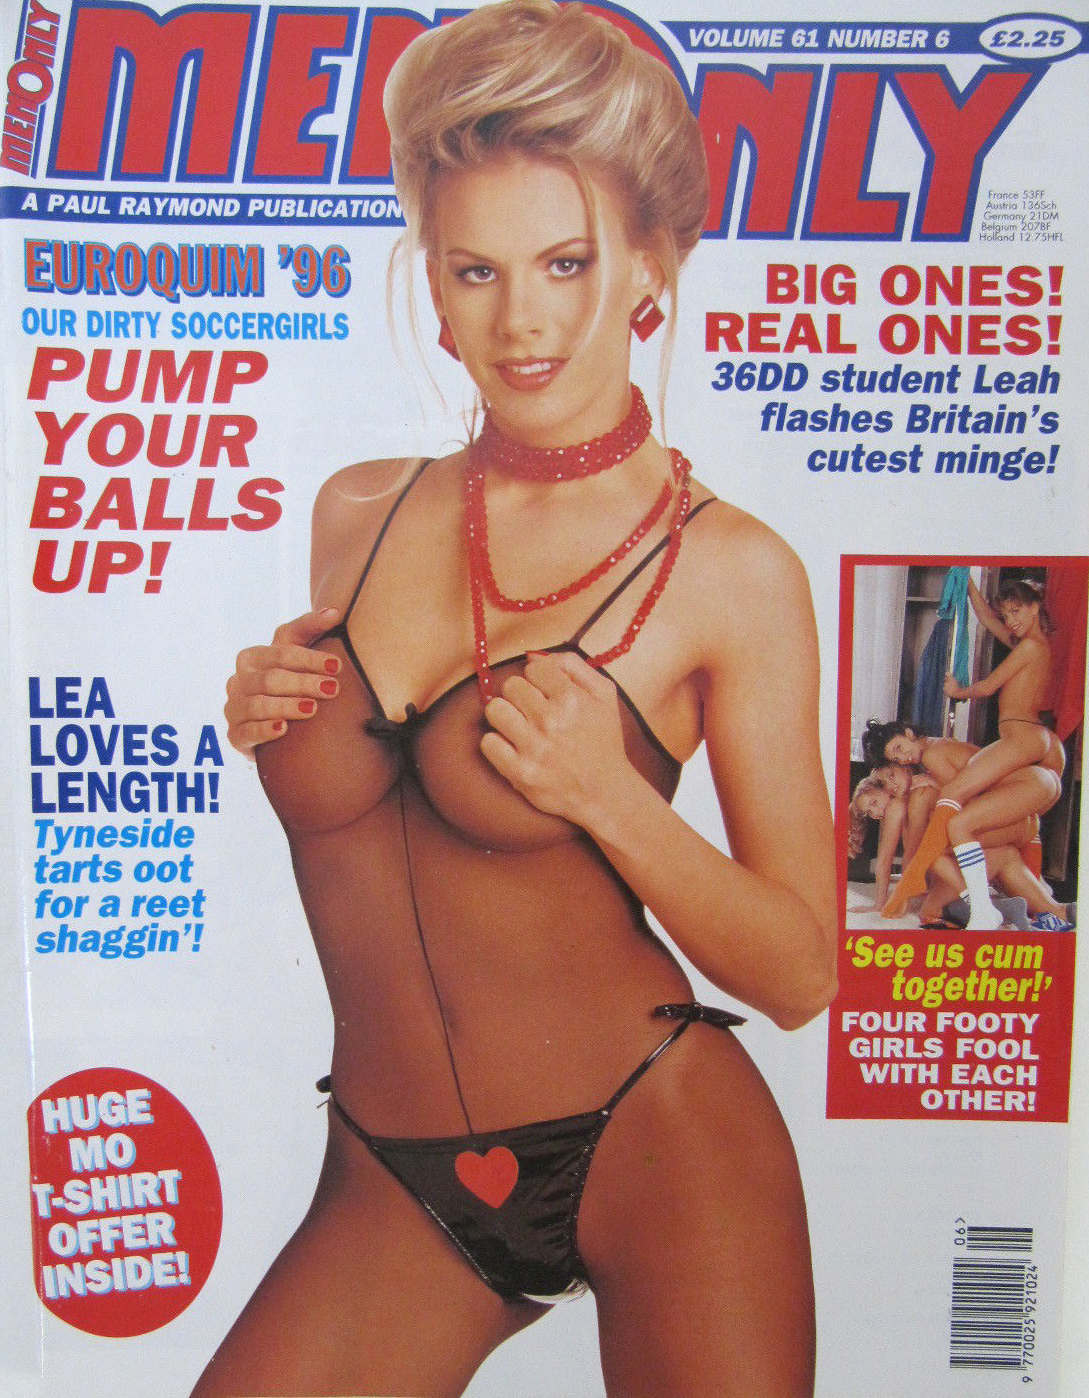 Men Only Vol. 61 # 6, , Euroquim '96 Our Dirty Soccergirls Pump Your Balls Up!